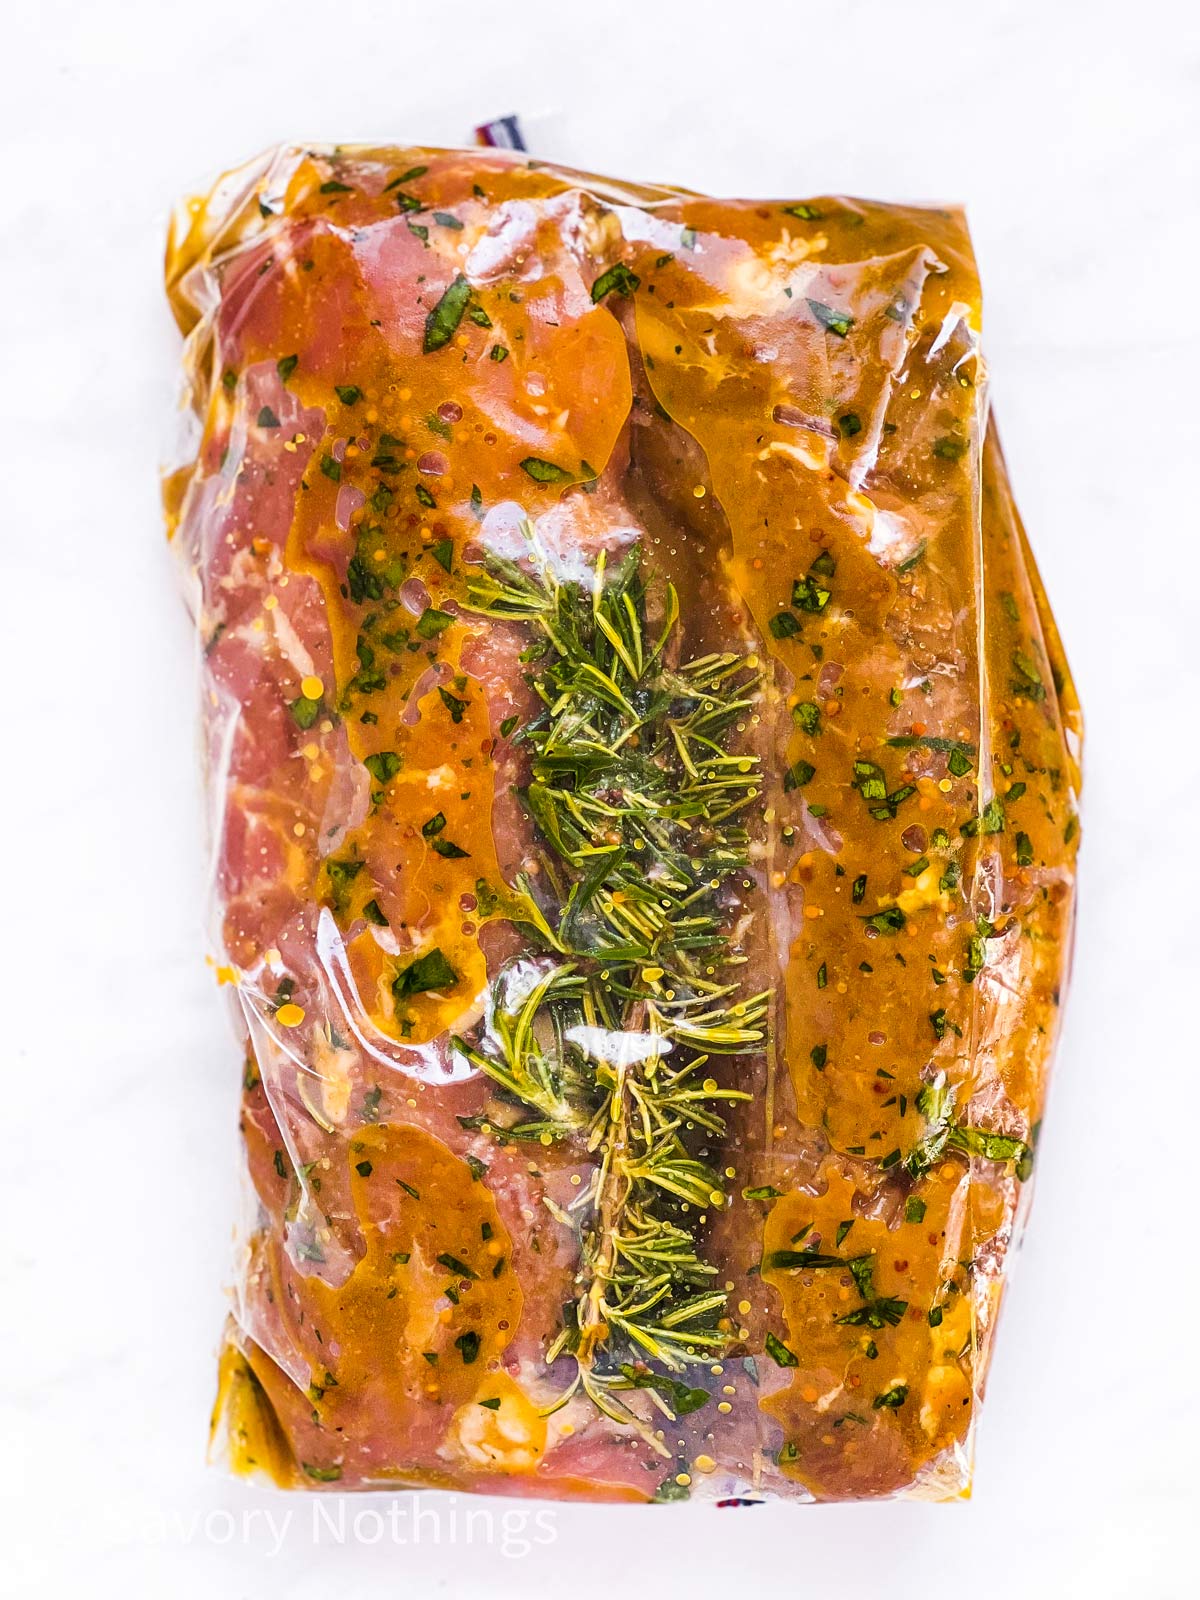 pork tenderloins and rosemary sprig in marinade in zip-top bag